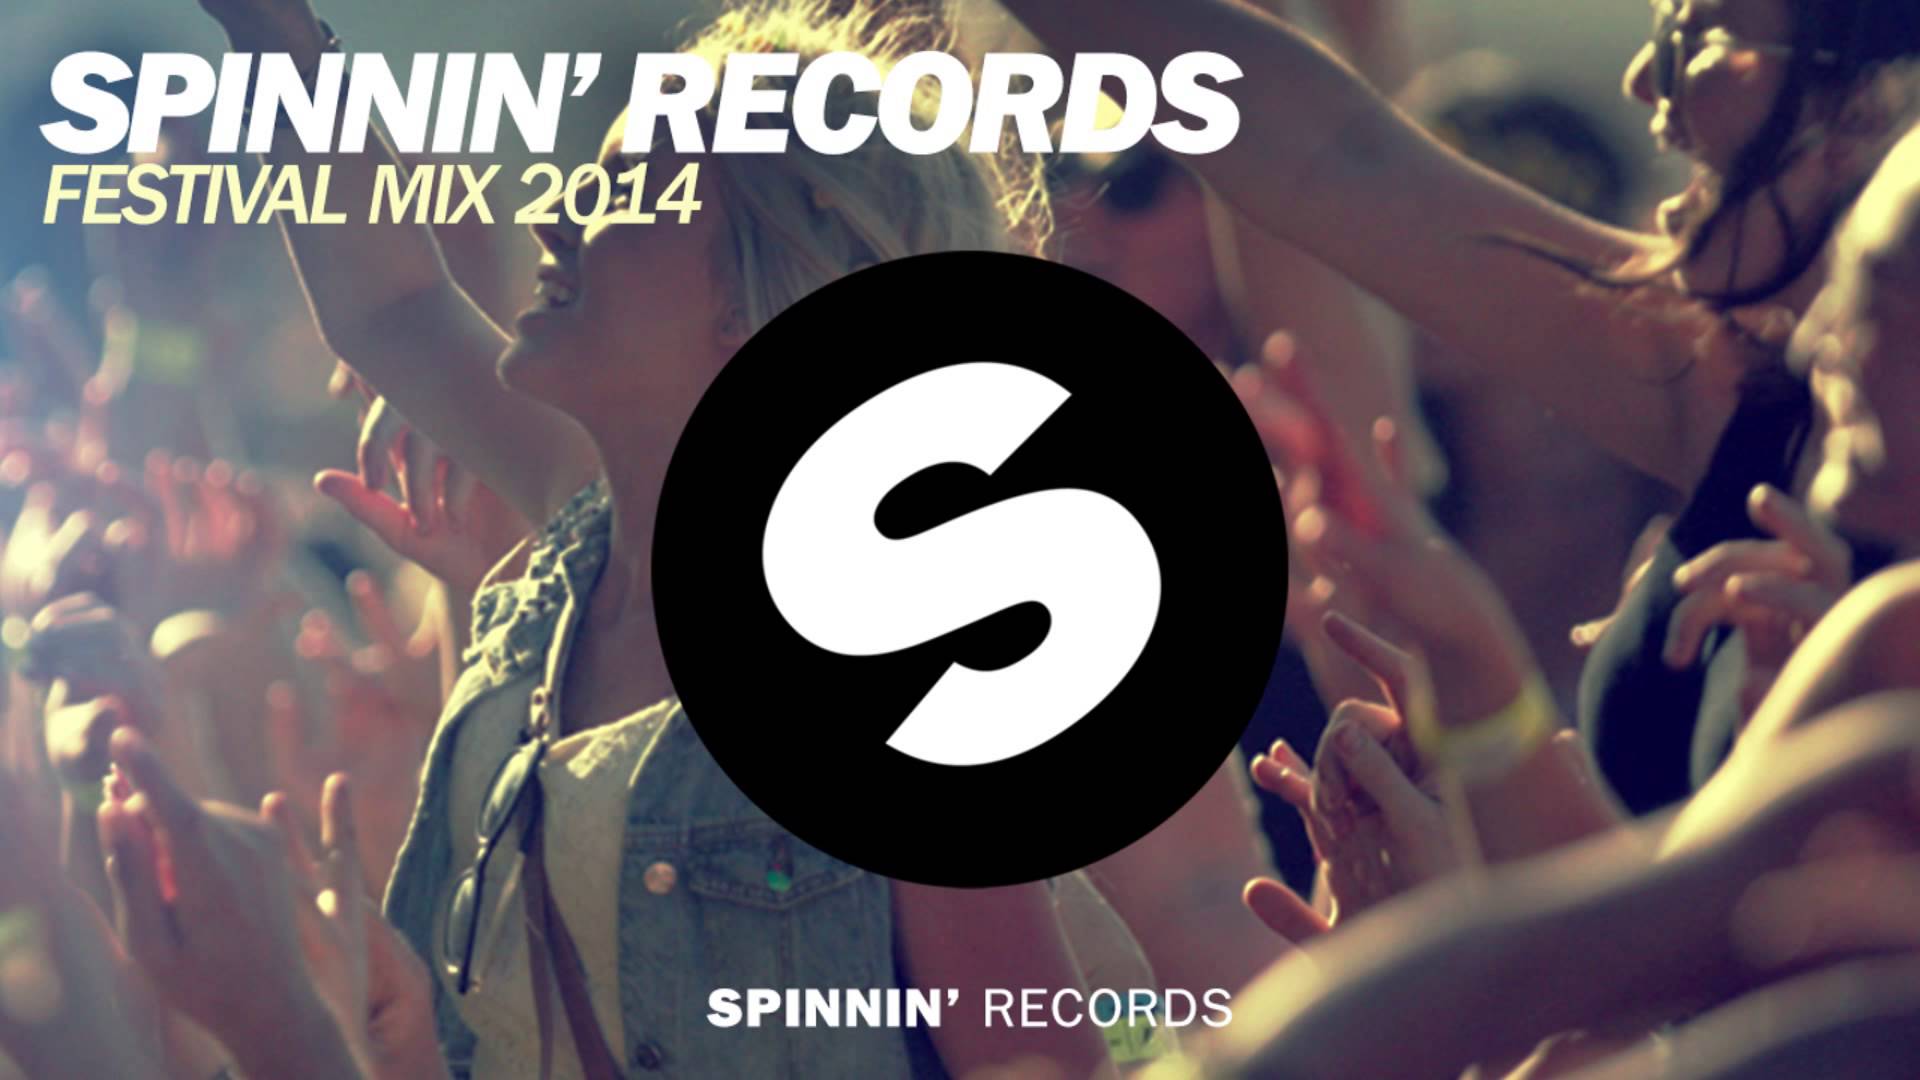 Spinnin' Records Festival Mix 2014